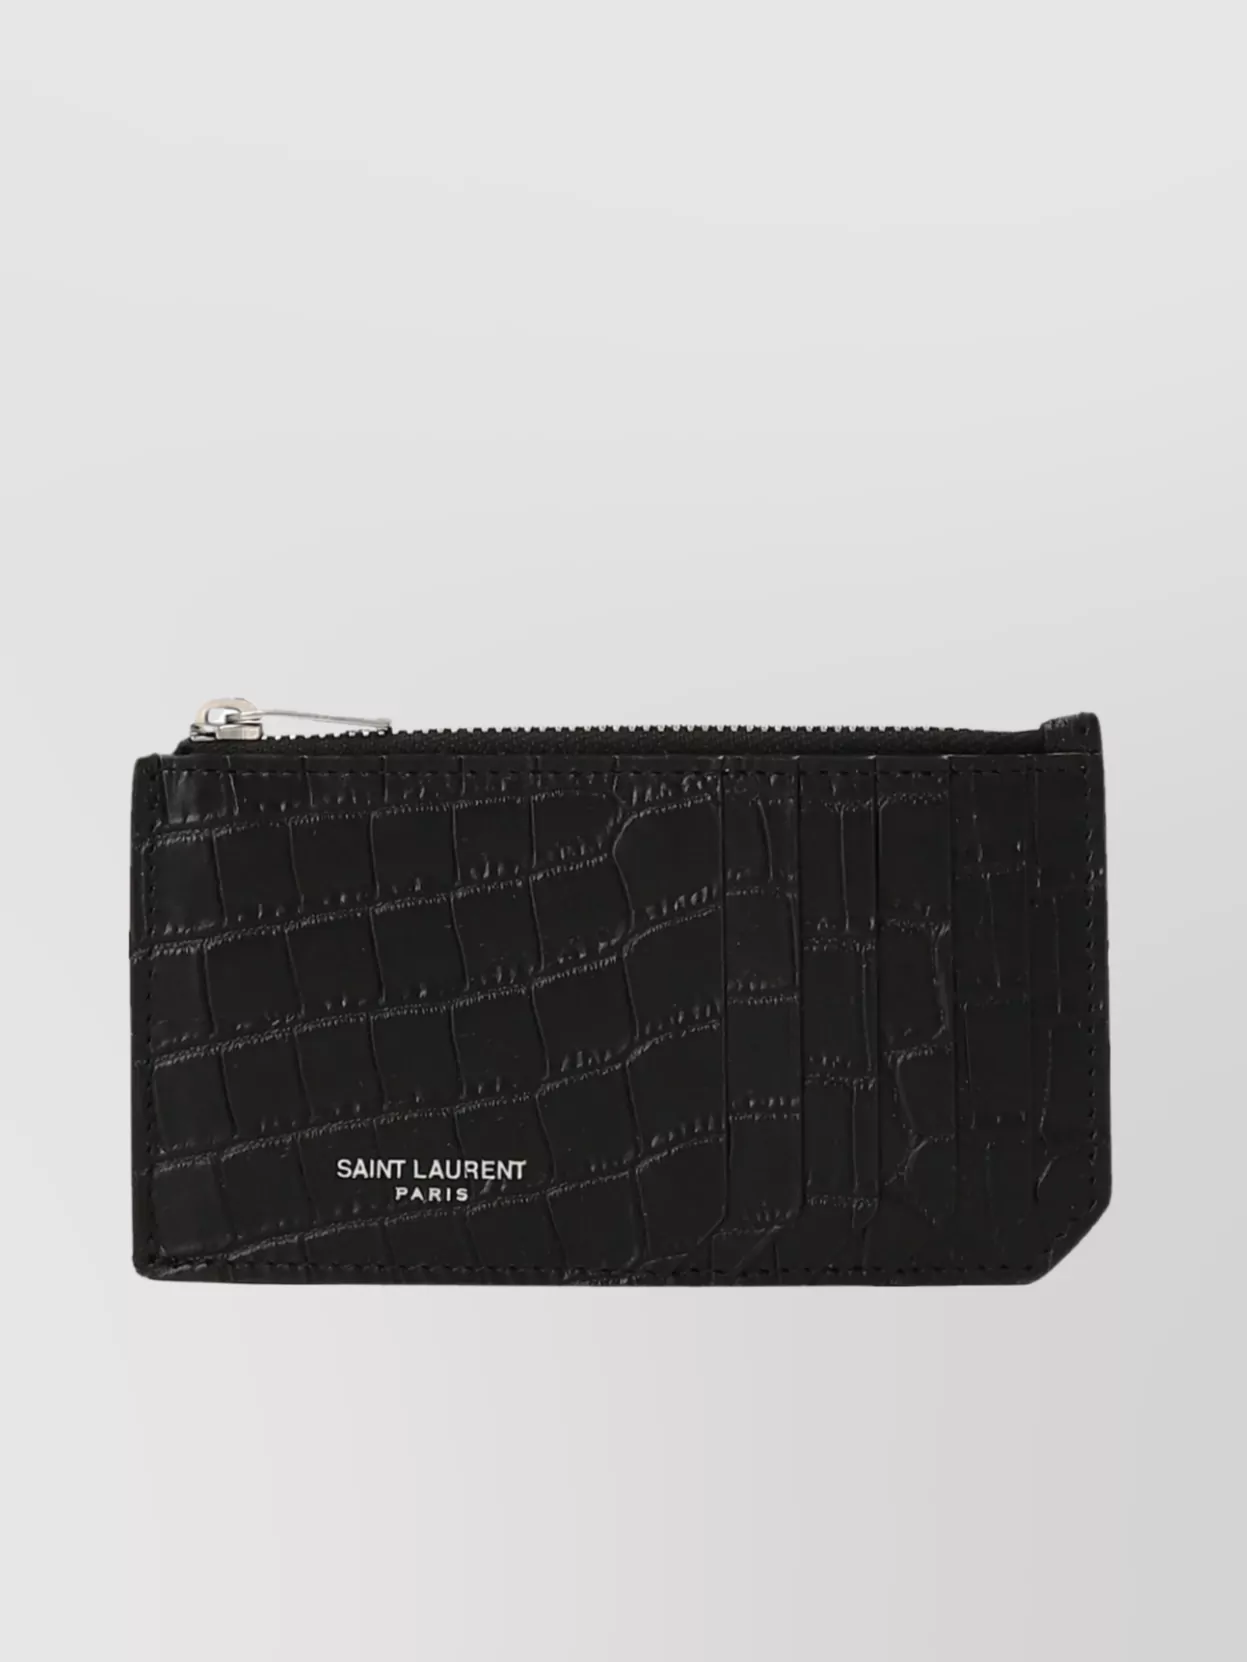 Saint Laurent Paris Crocodile Texture Card Holder In Black